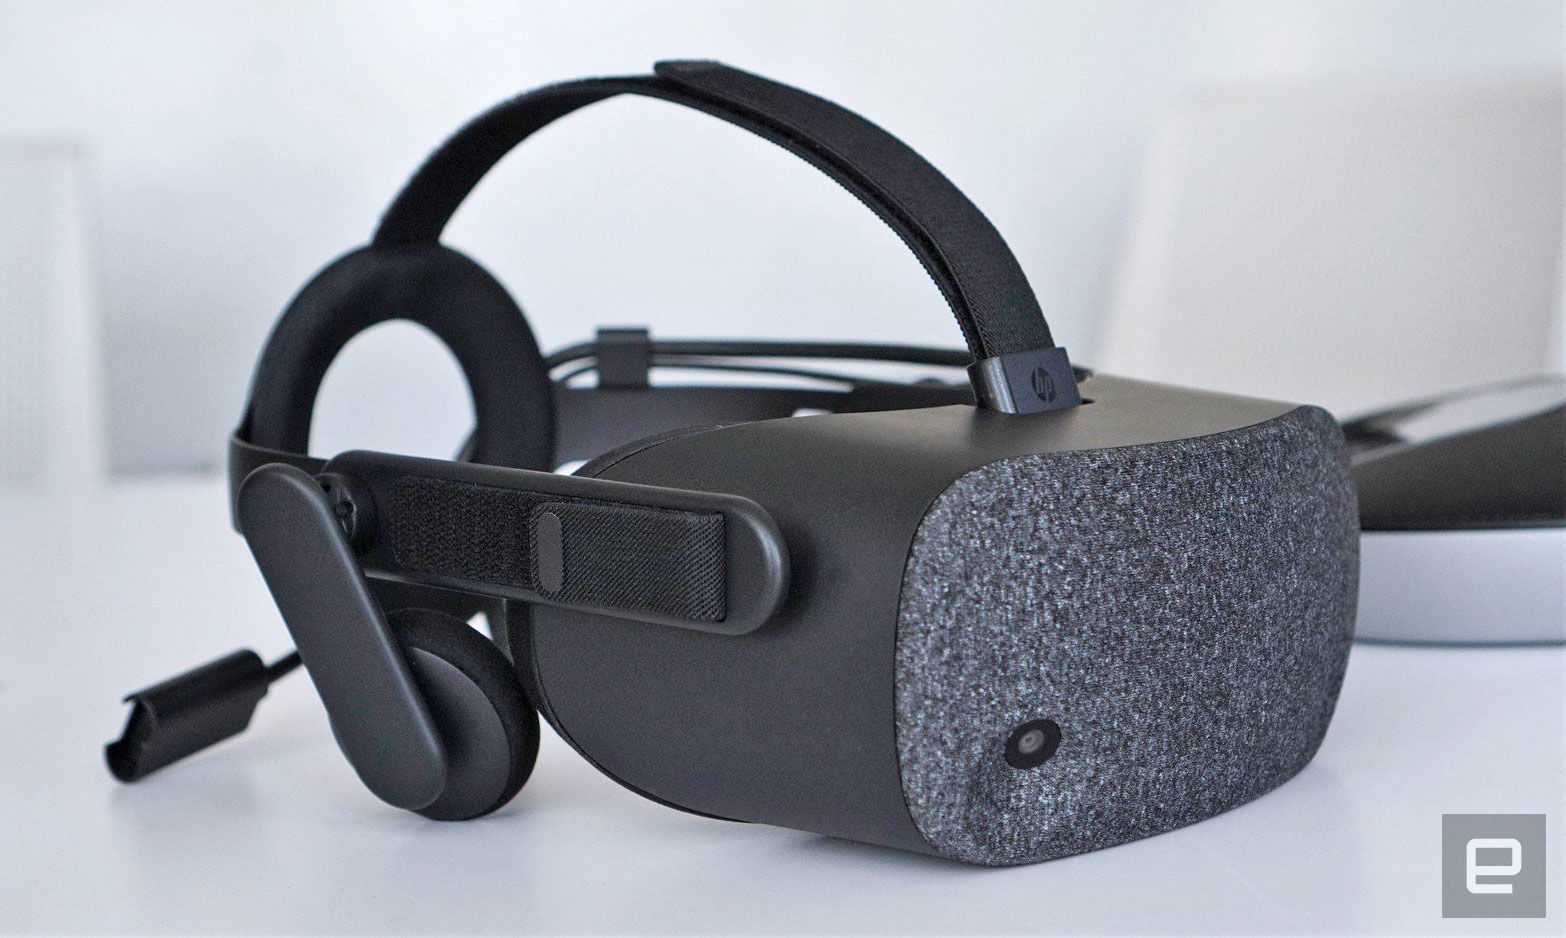 Amazon.com: hp reverb virtual reality headset - professional edition: video games